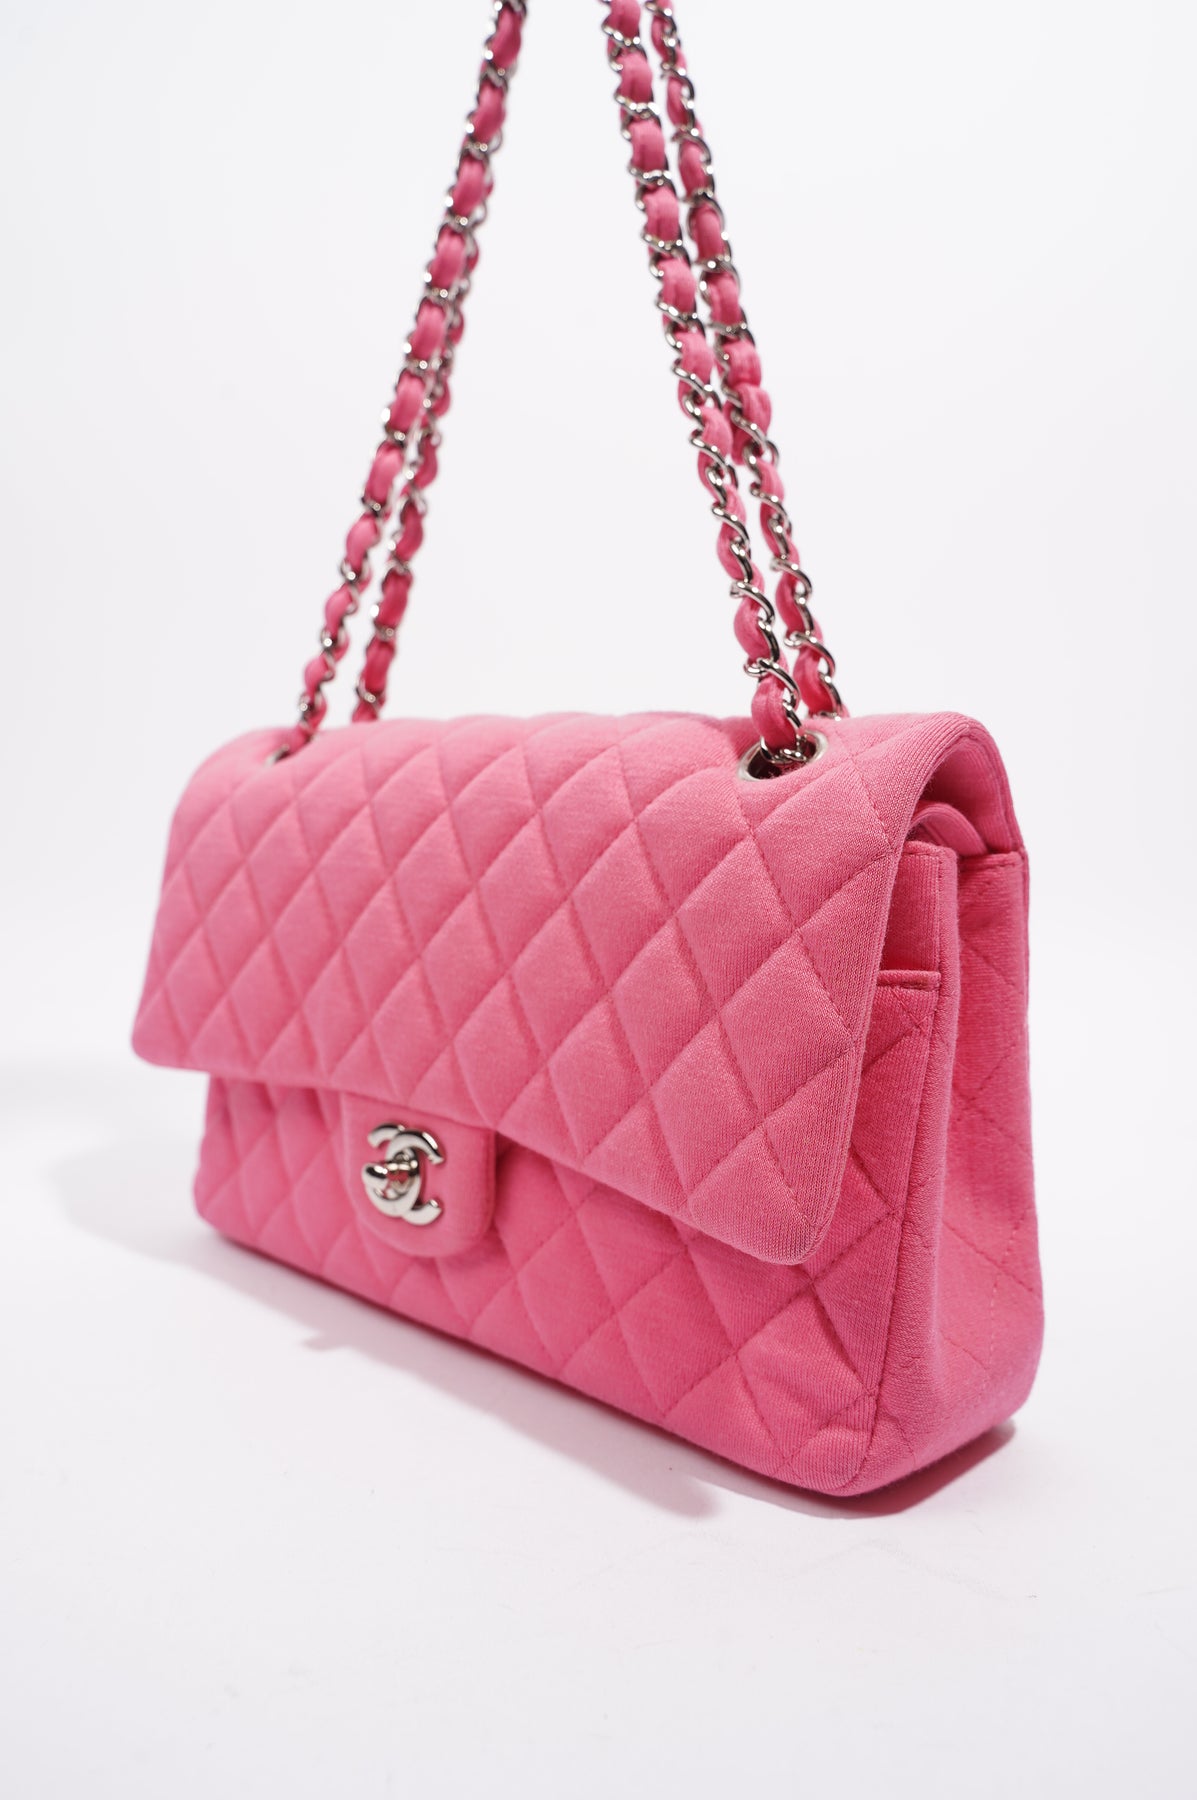 Chanel Maxi Flap Bag - Shop on Pinterest